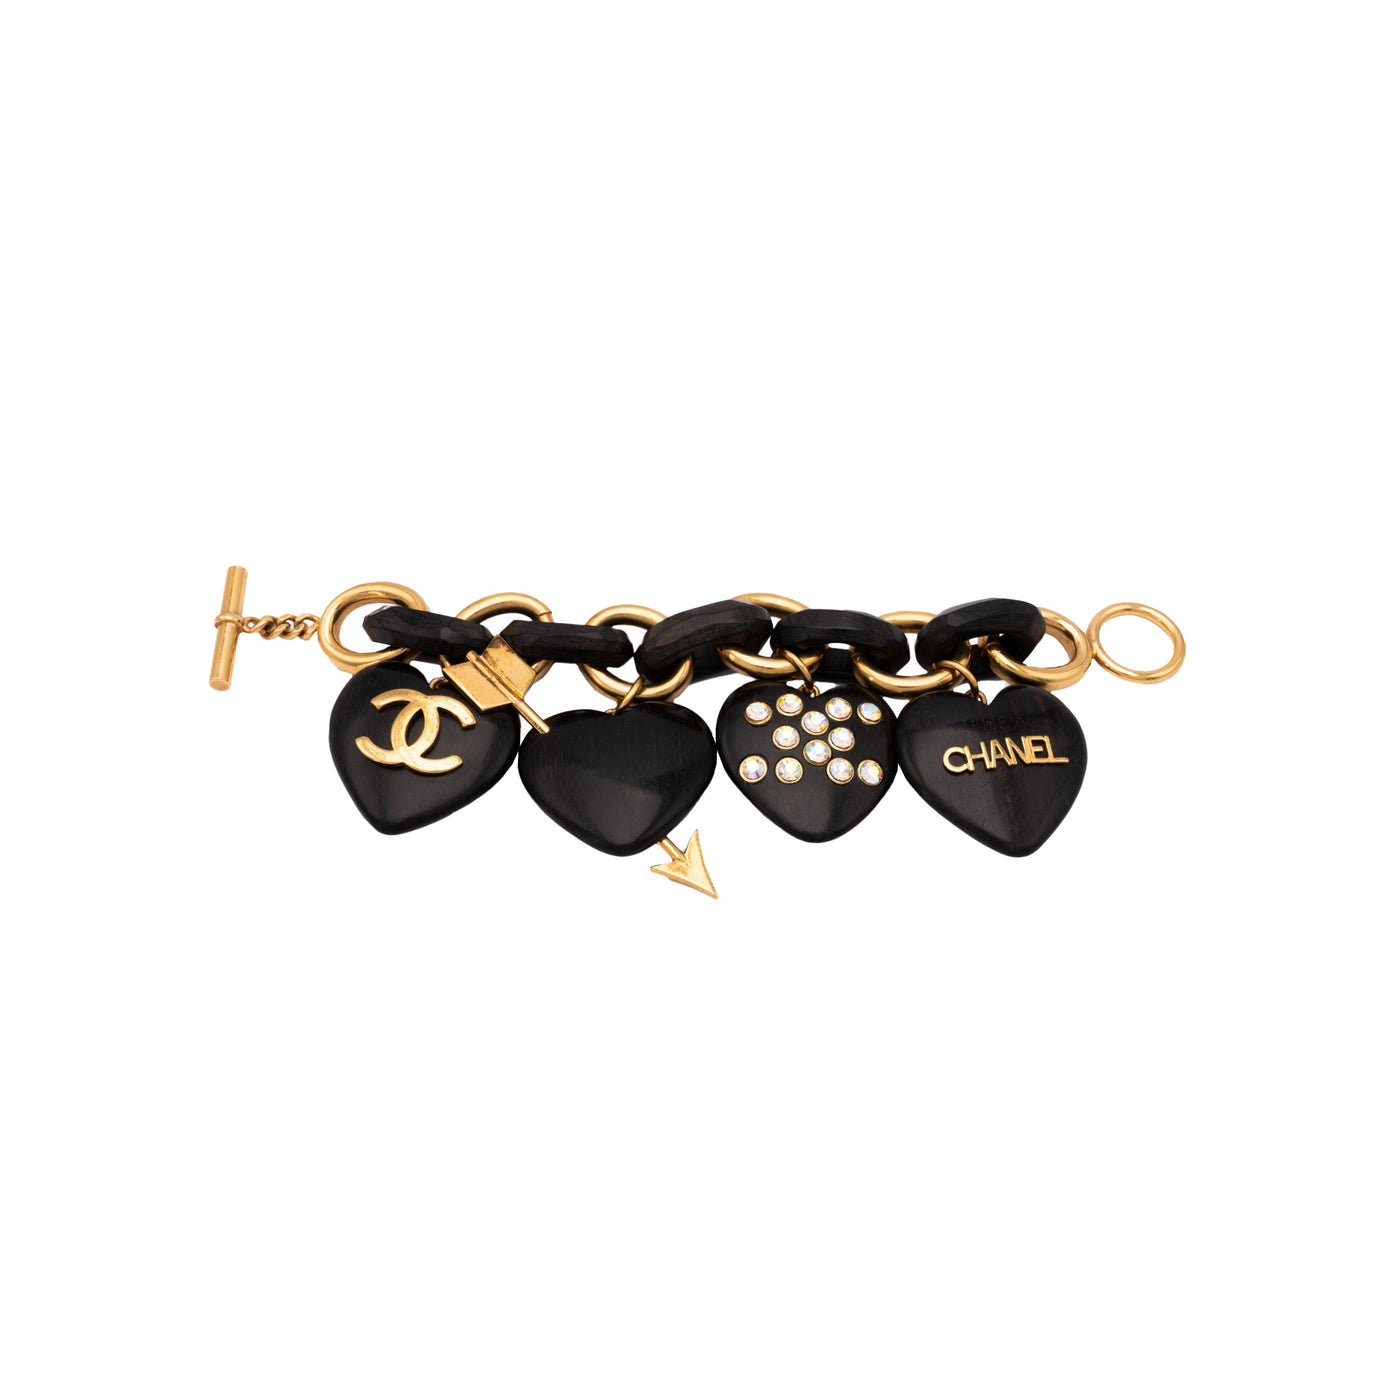 Chanel exquisite black gold wooden heart pendants bracelet embellished rhinestones logo Chain style T-bar fastening pre-owned nft